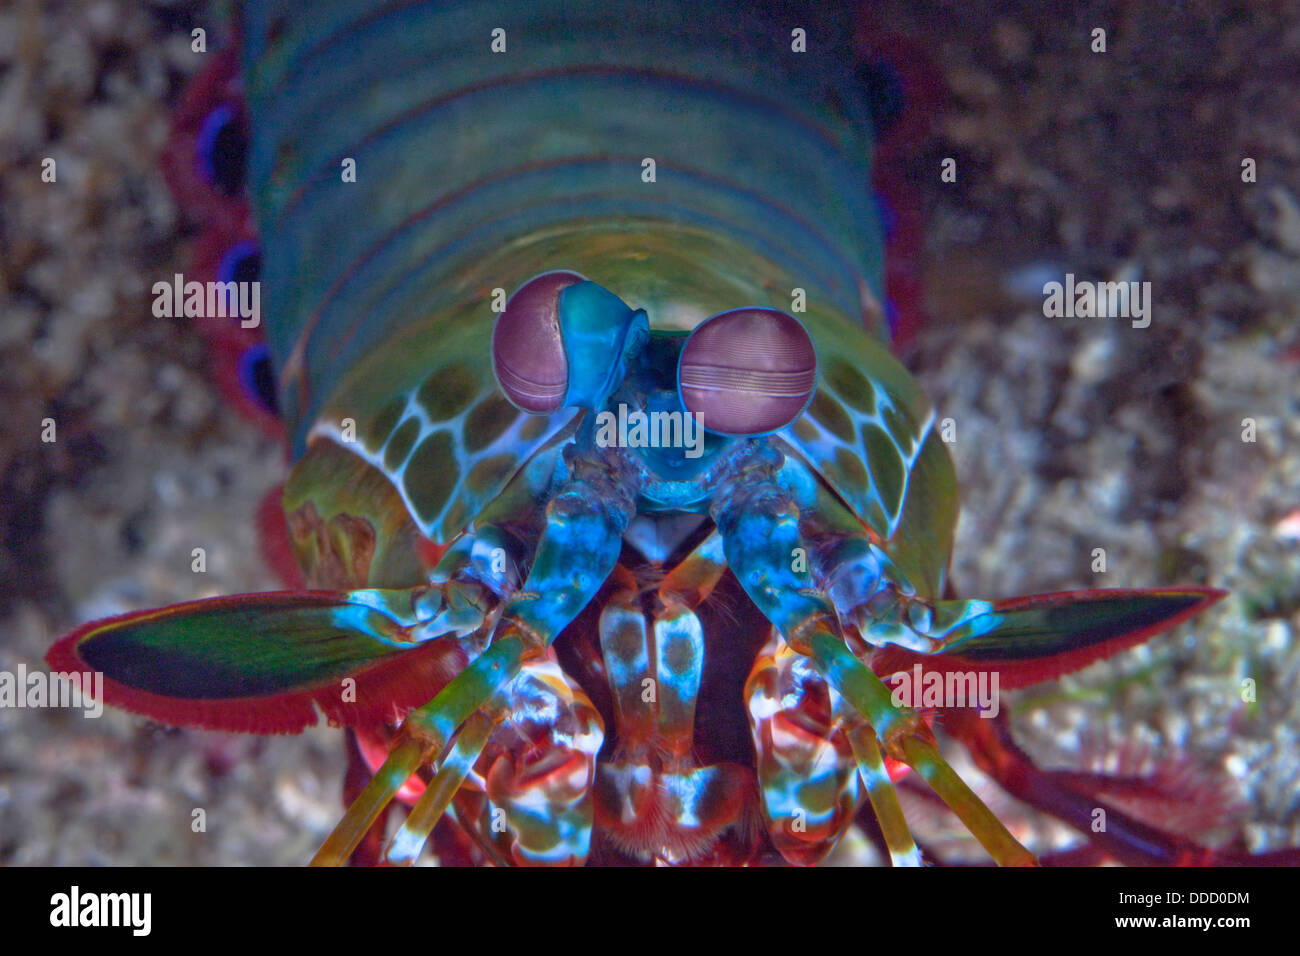 Peacock mantis shrimp Stock Photo